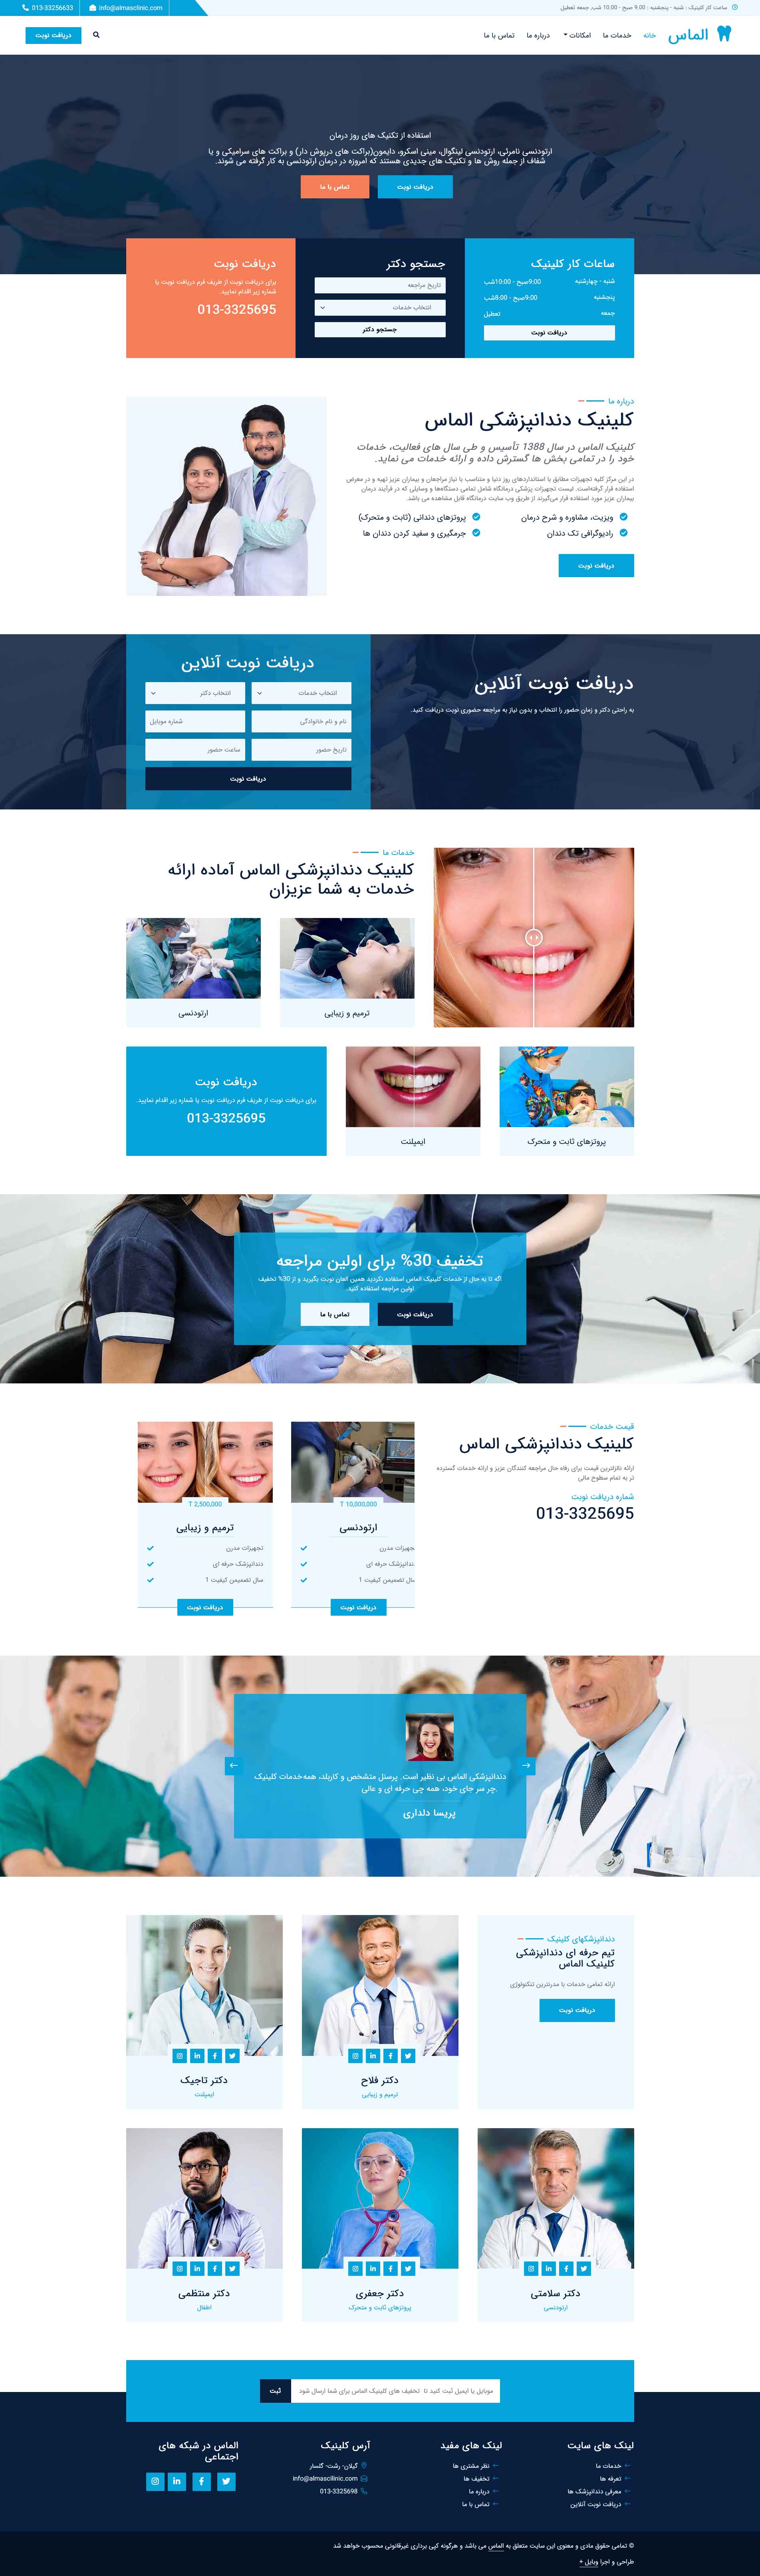 وبسایت آماده کلینیک دندانپزشکی با امکان دریافت نوبت آنلاین